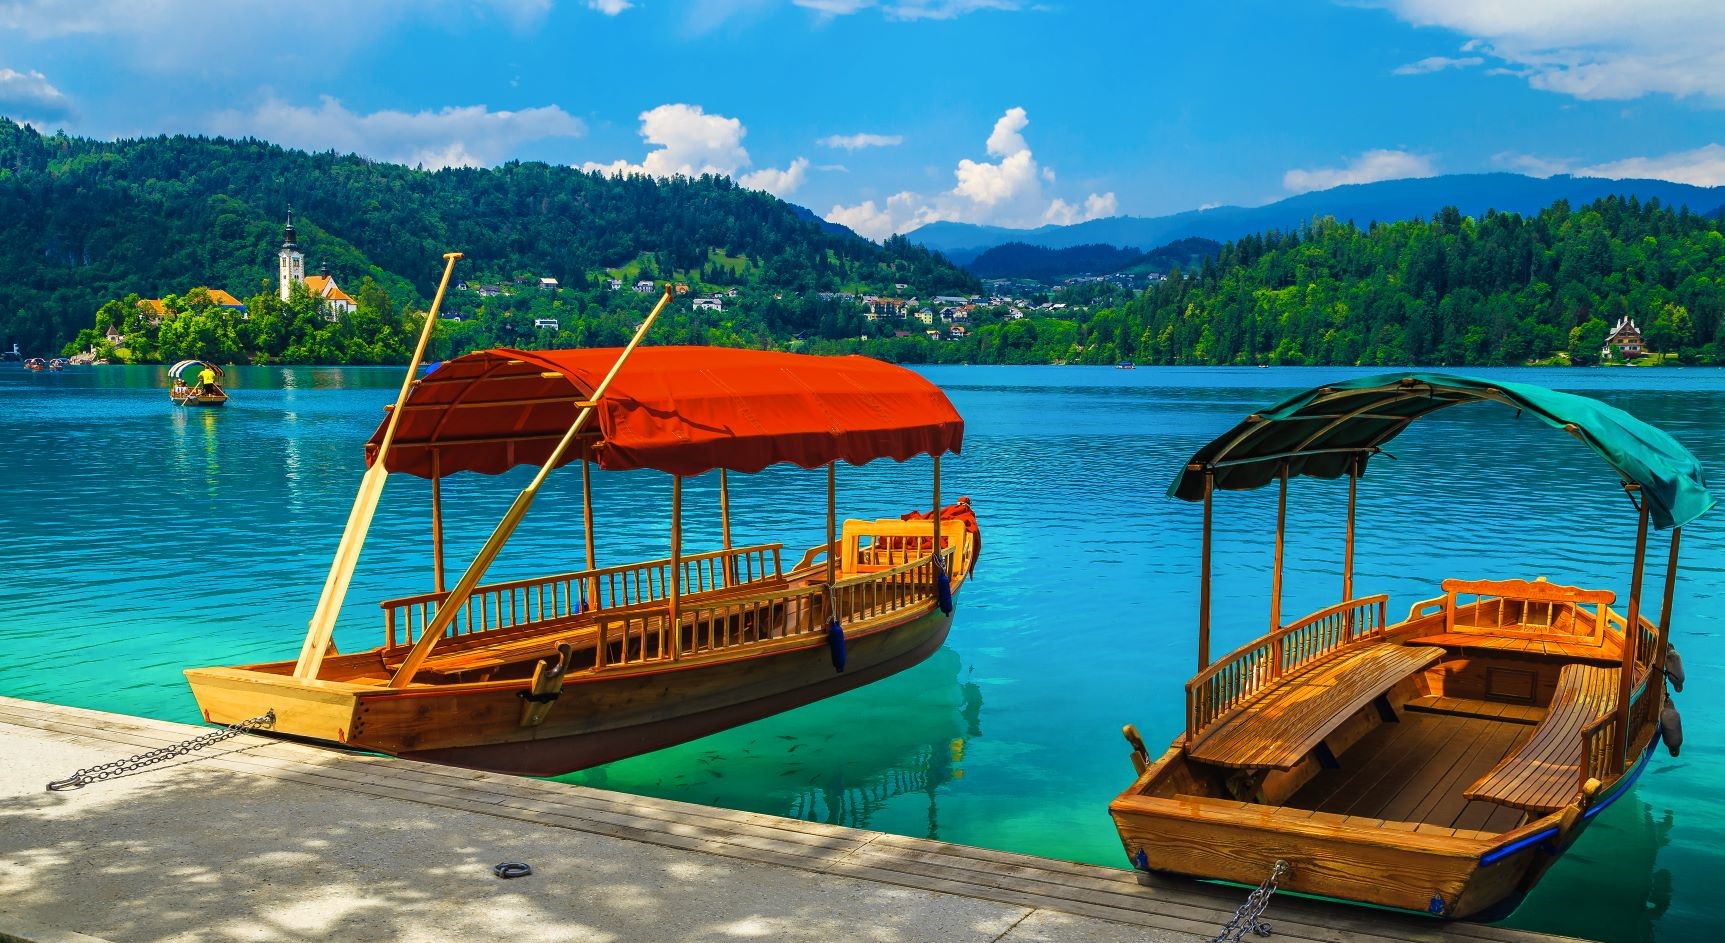 KNMtravel DMC, Slovenia, Bled lake, tour, pletna boat